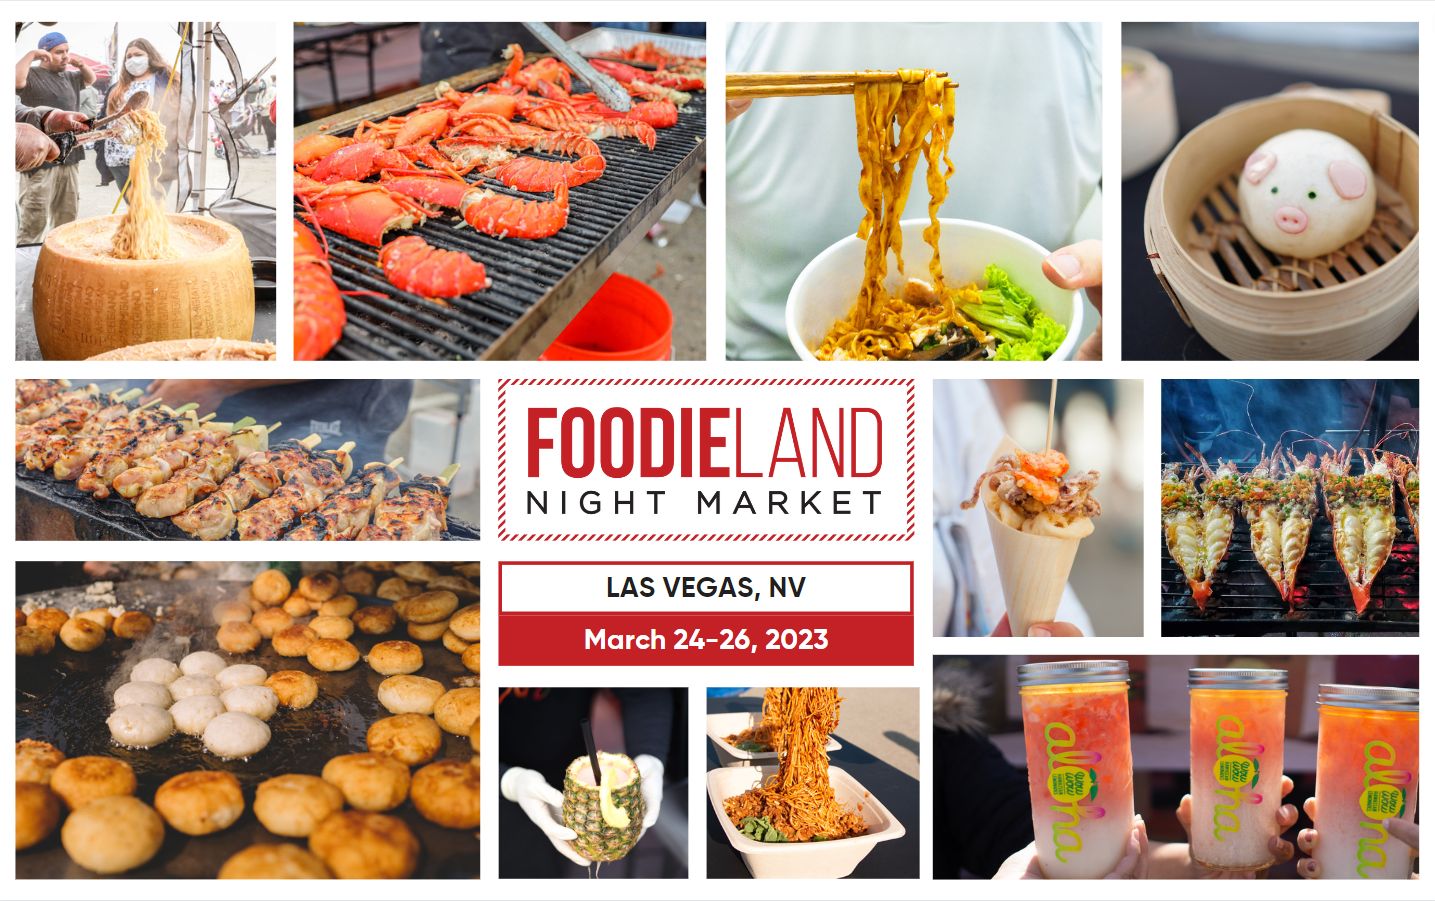 FoodieLand Night Market - Las Vegas | March 24-26, 2023, Las Vegas, Nevada, United States